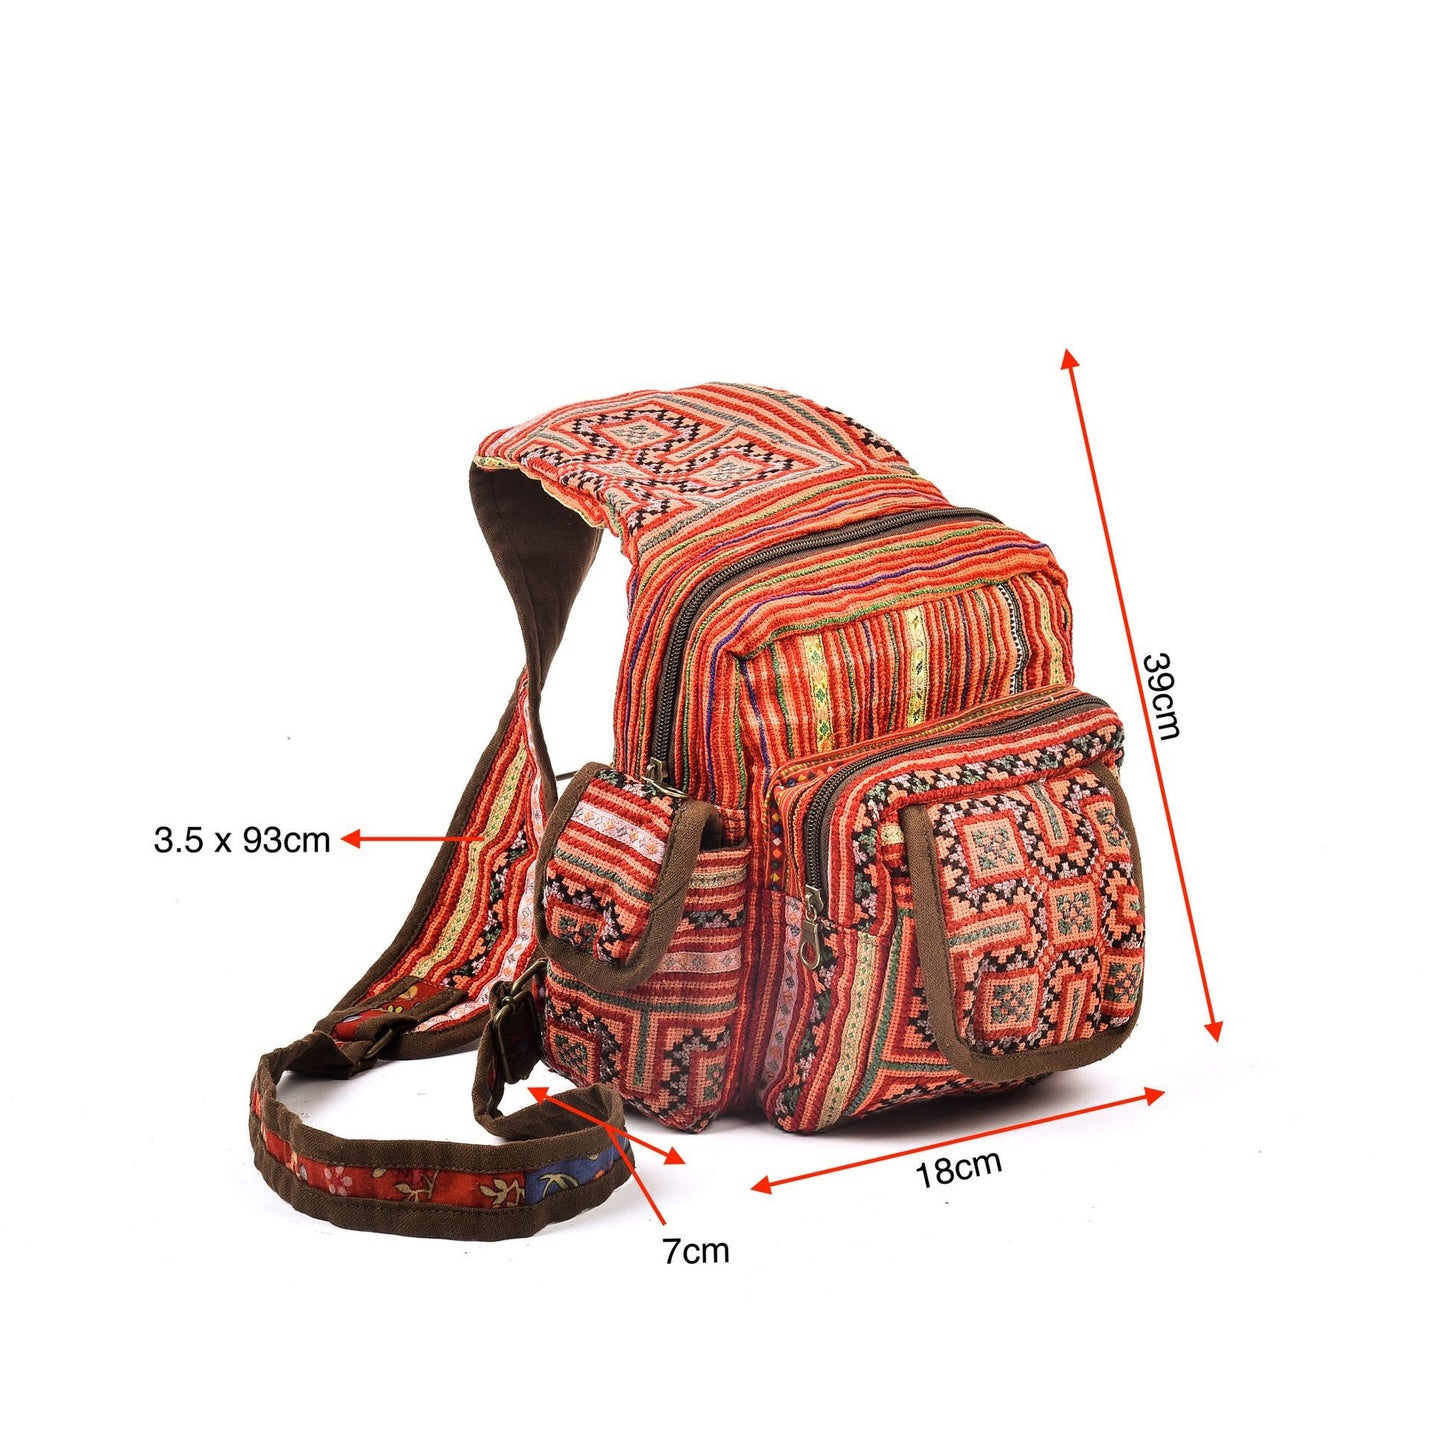 Boho-style linen, embroidery Sling bag, H'mong tribal pattern in ORANGE